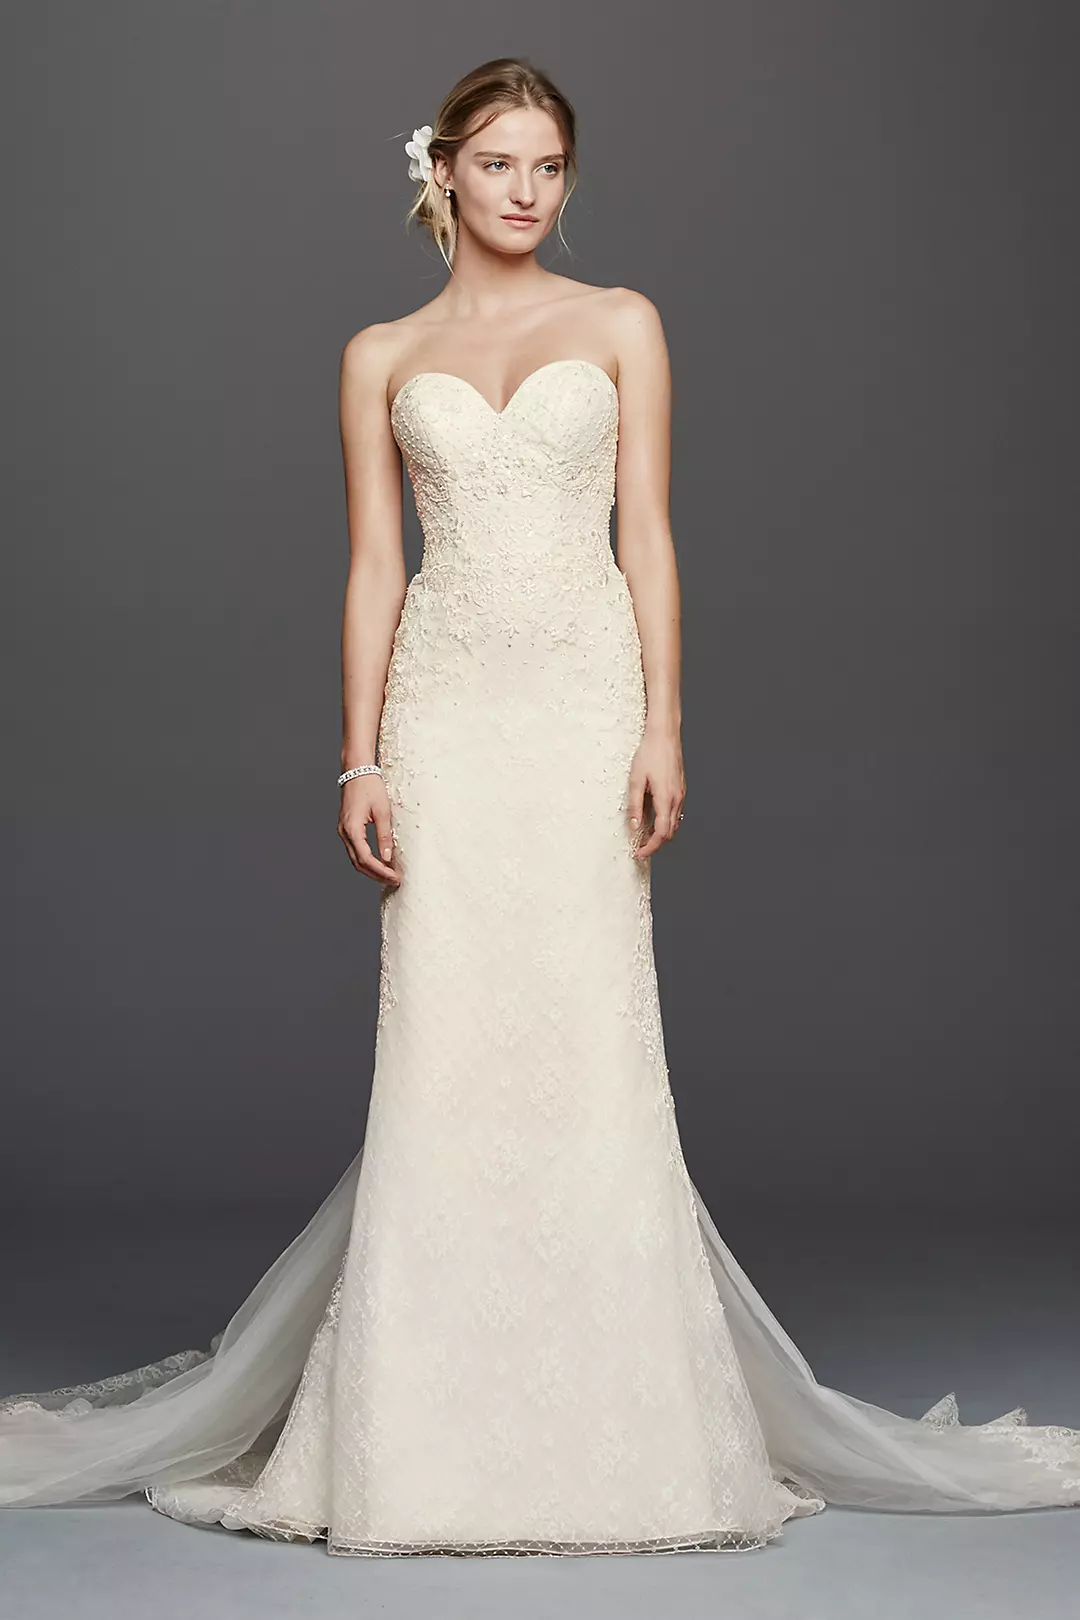 Oleg Cassini Venice Lace Sheath Wedding Dress Image